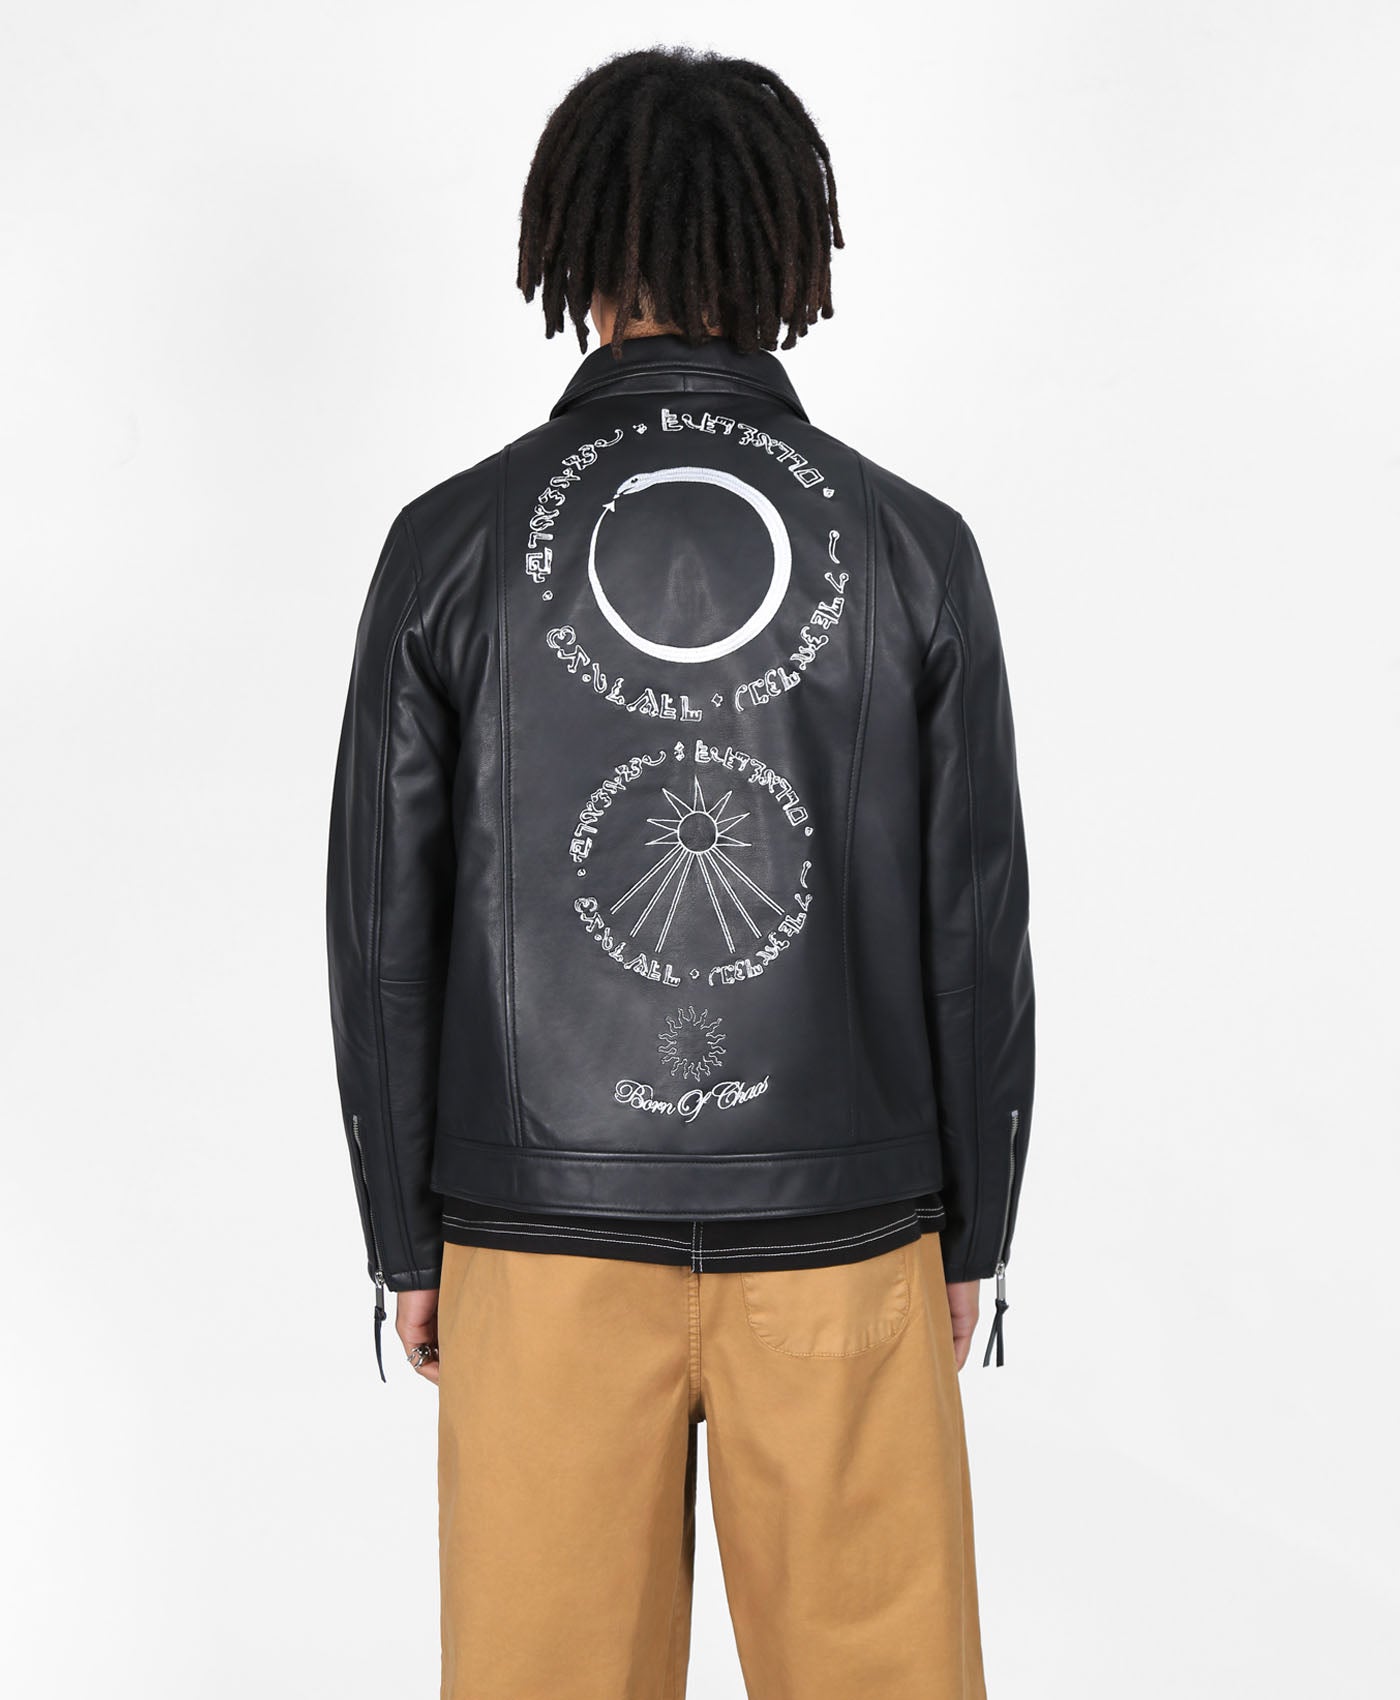 Milo Embroidery Worker Jacket